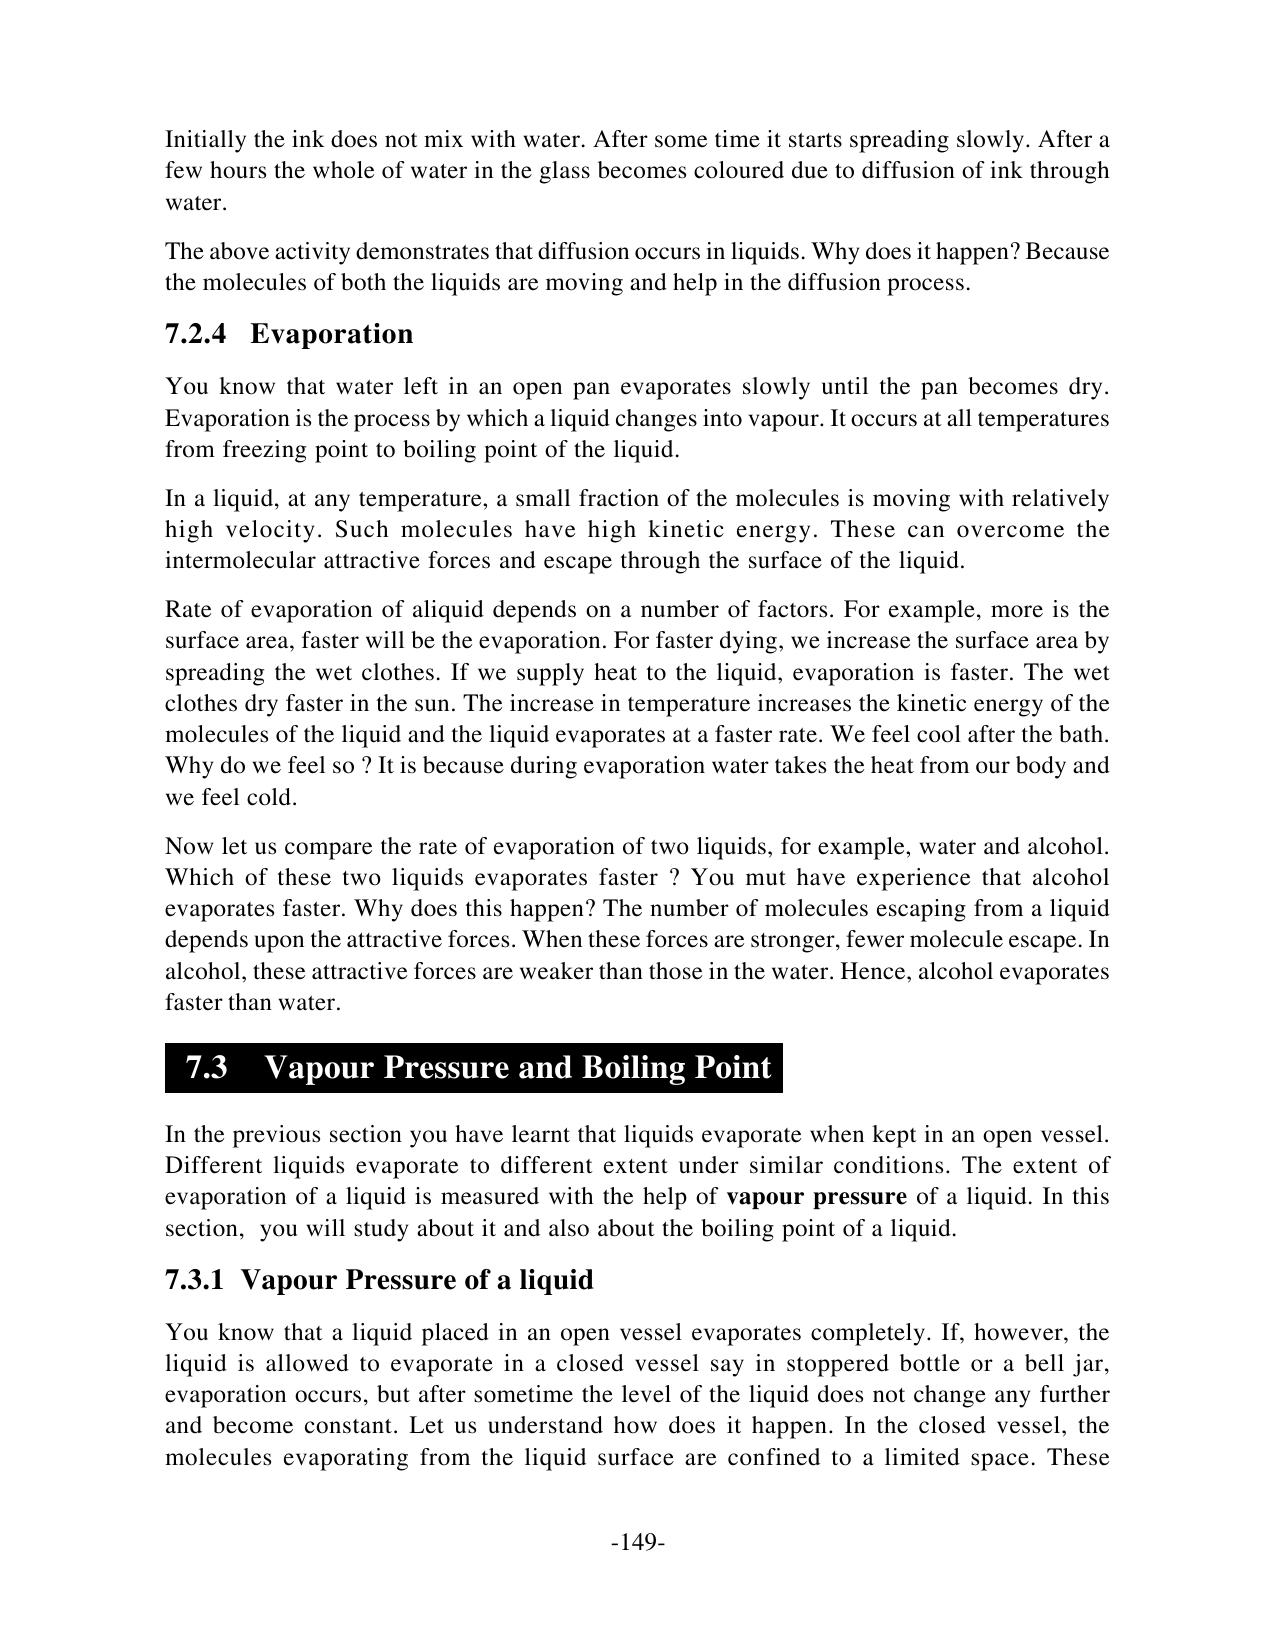 TS SCERT Inter 1st Year Chemistry Vol – I Path 1 (English Medium) Text Book - Page 158